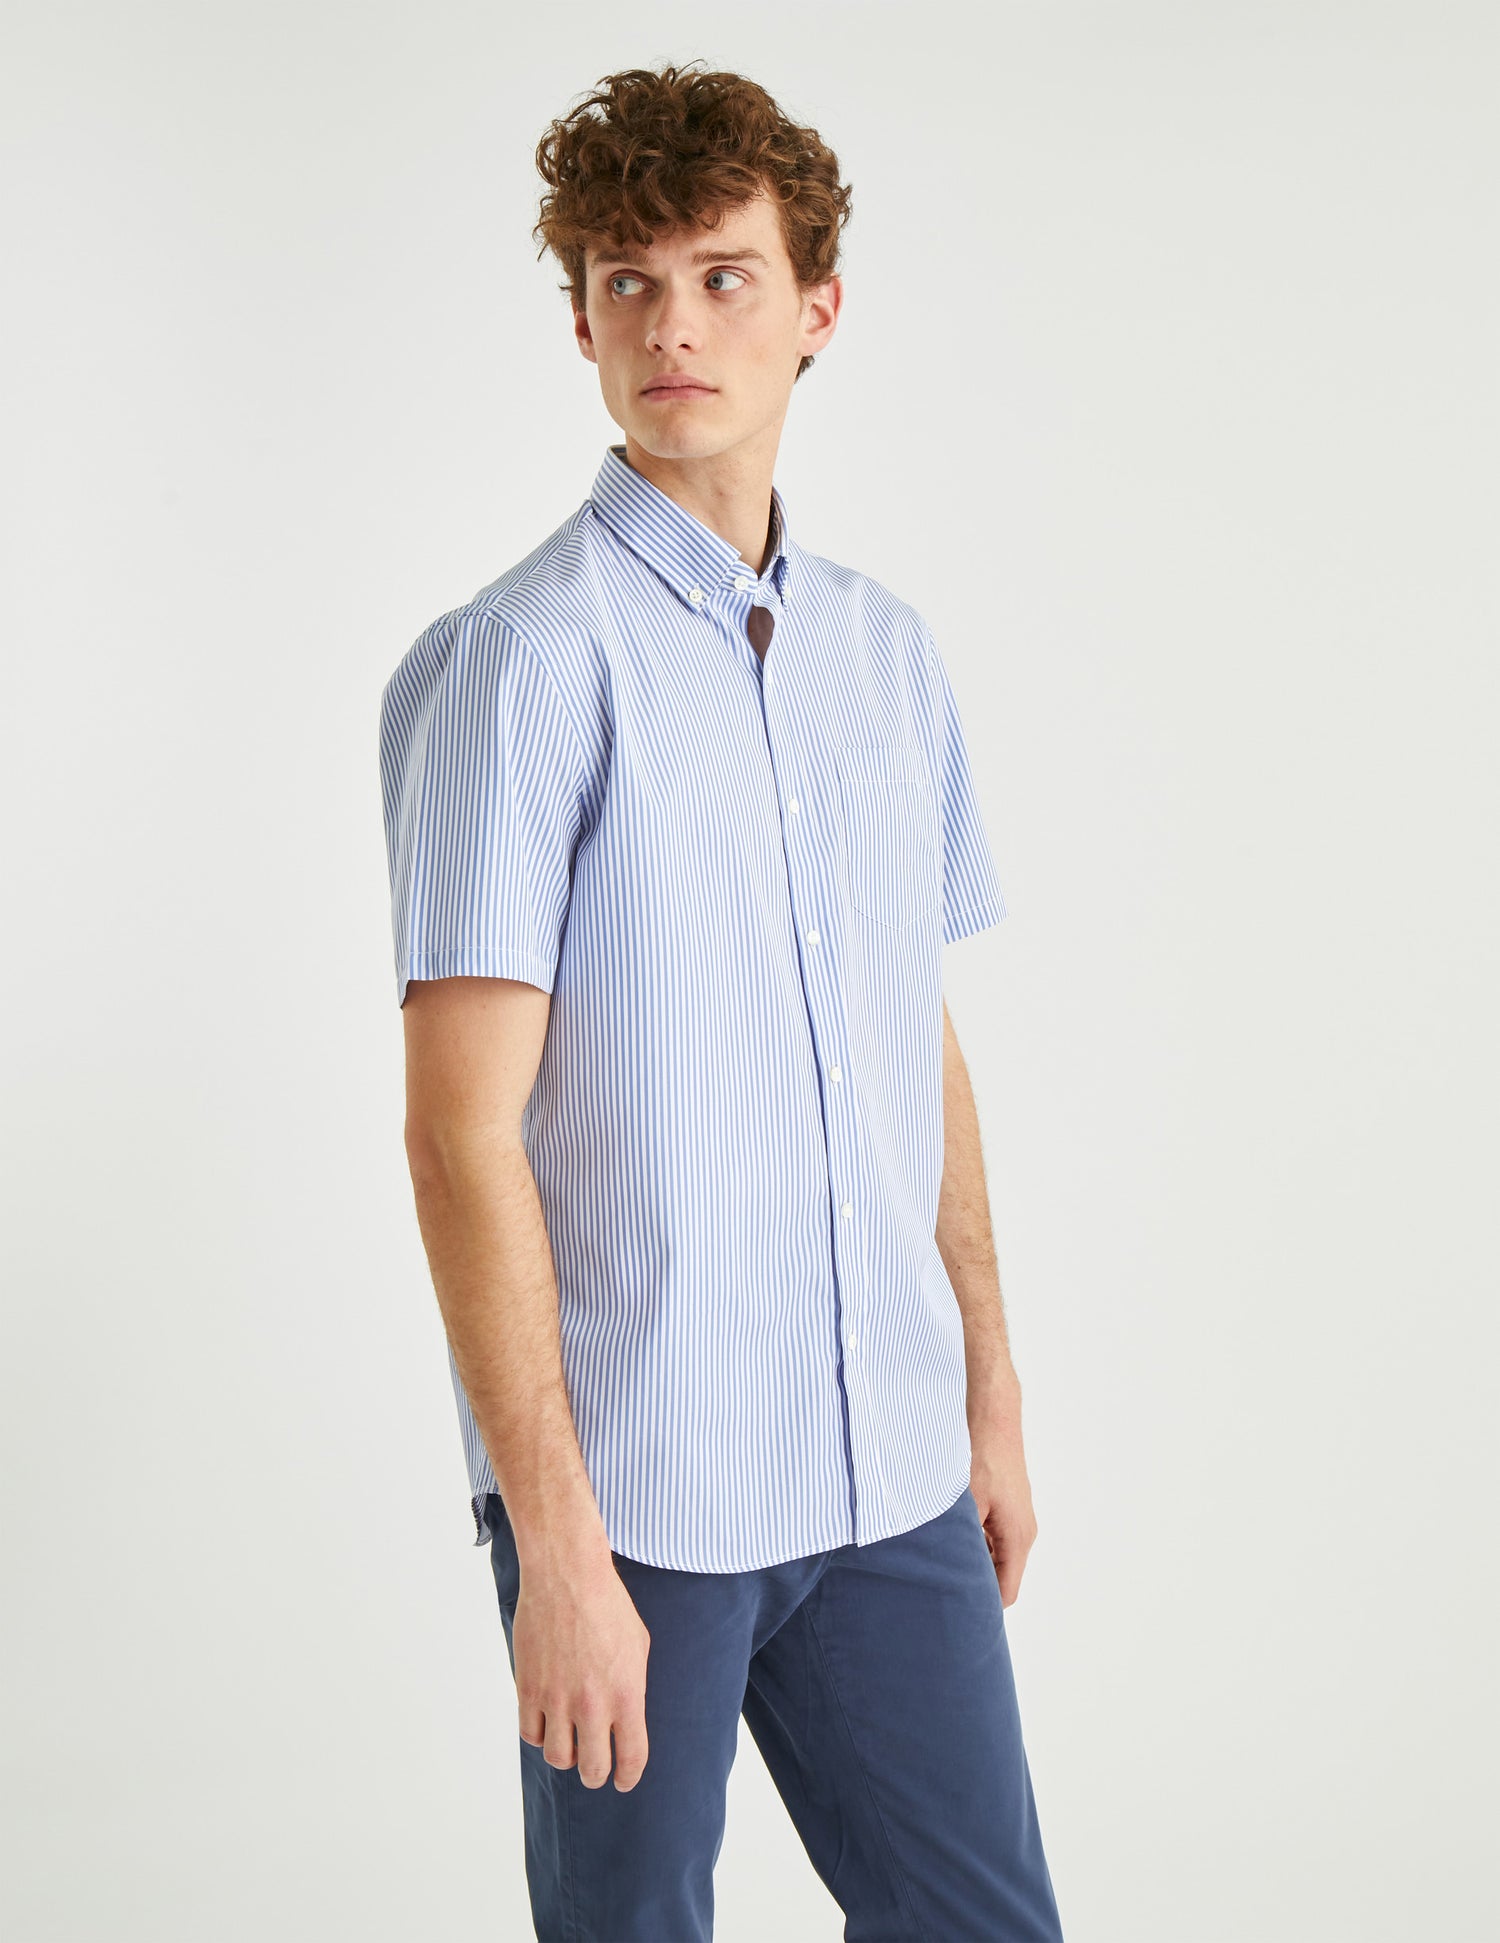 Classic blue striped short-sleeved shirt - Poplin - American Collar#3